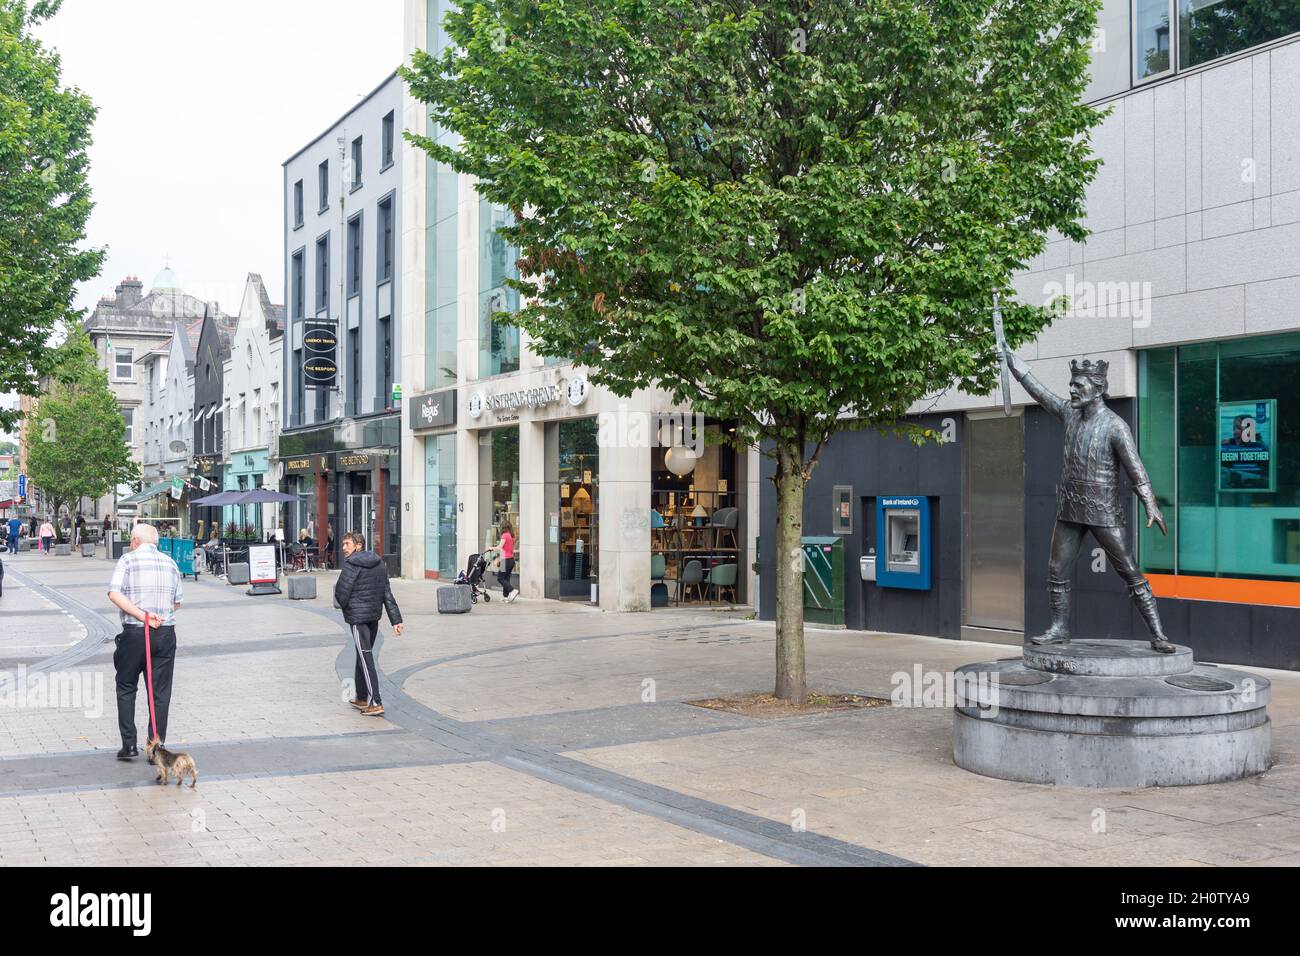 Richard Harris (actor) statue, Bedford Row, City Centre, Limerick (Luimneach), County Limerick, Republic of Ireland Stock Photo